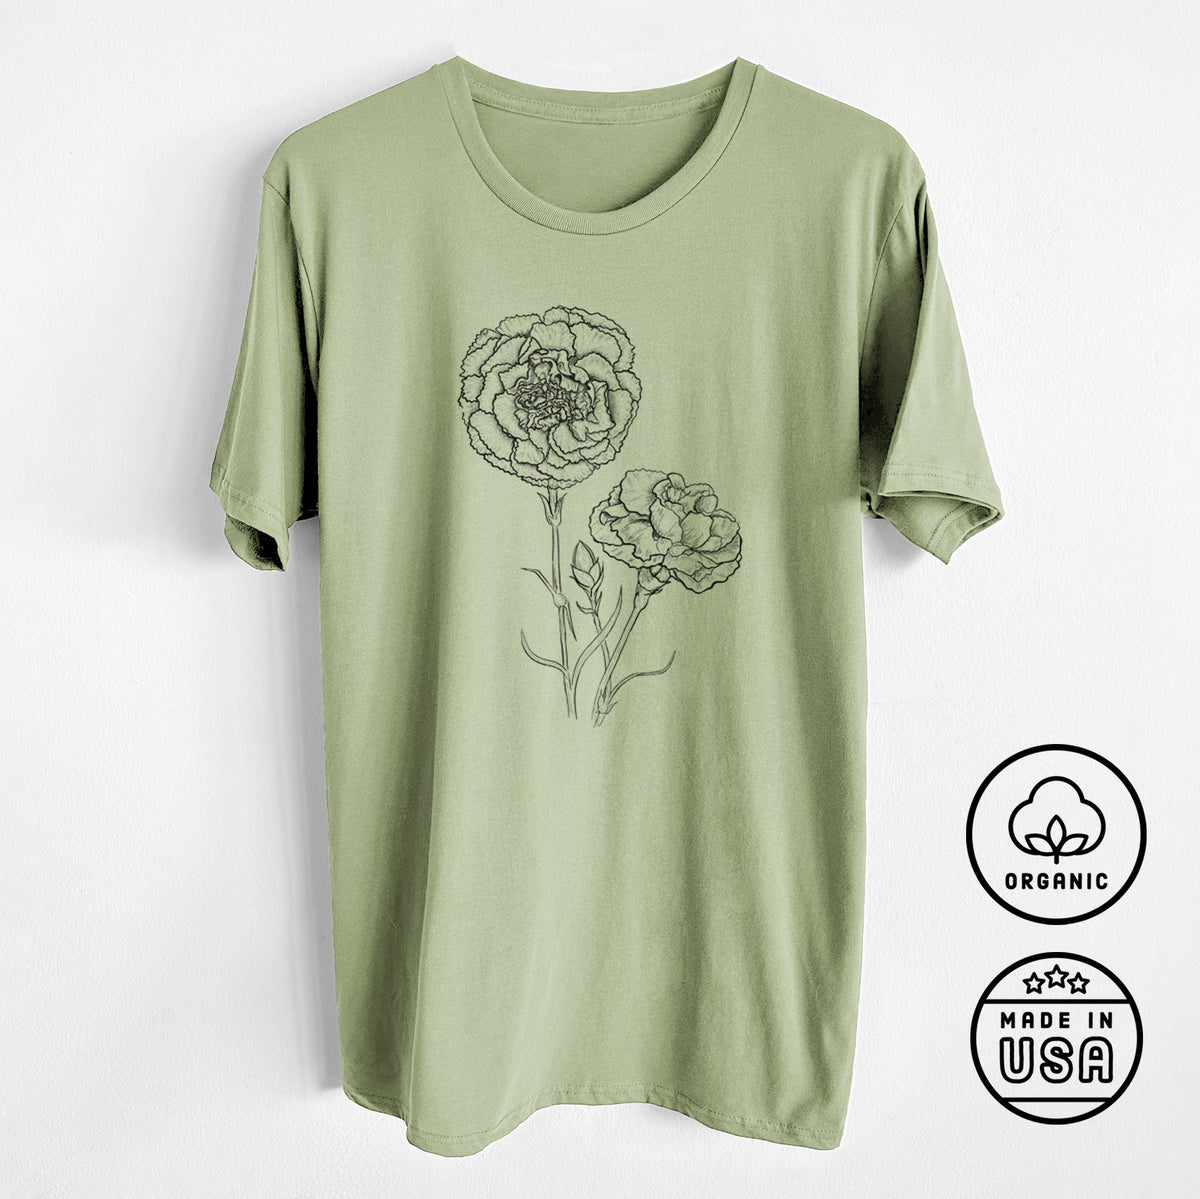 Carnations - Dianthus caryophyllus - Unisex Crewneck - Made in USA - 100% Organic Cotton